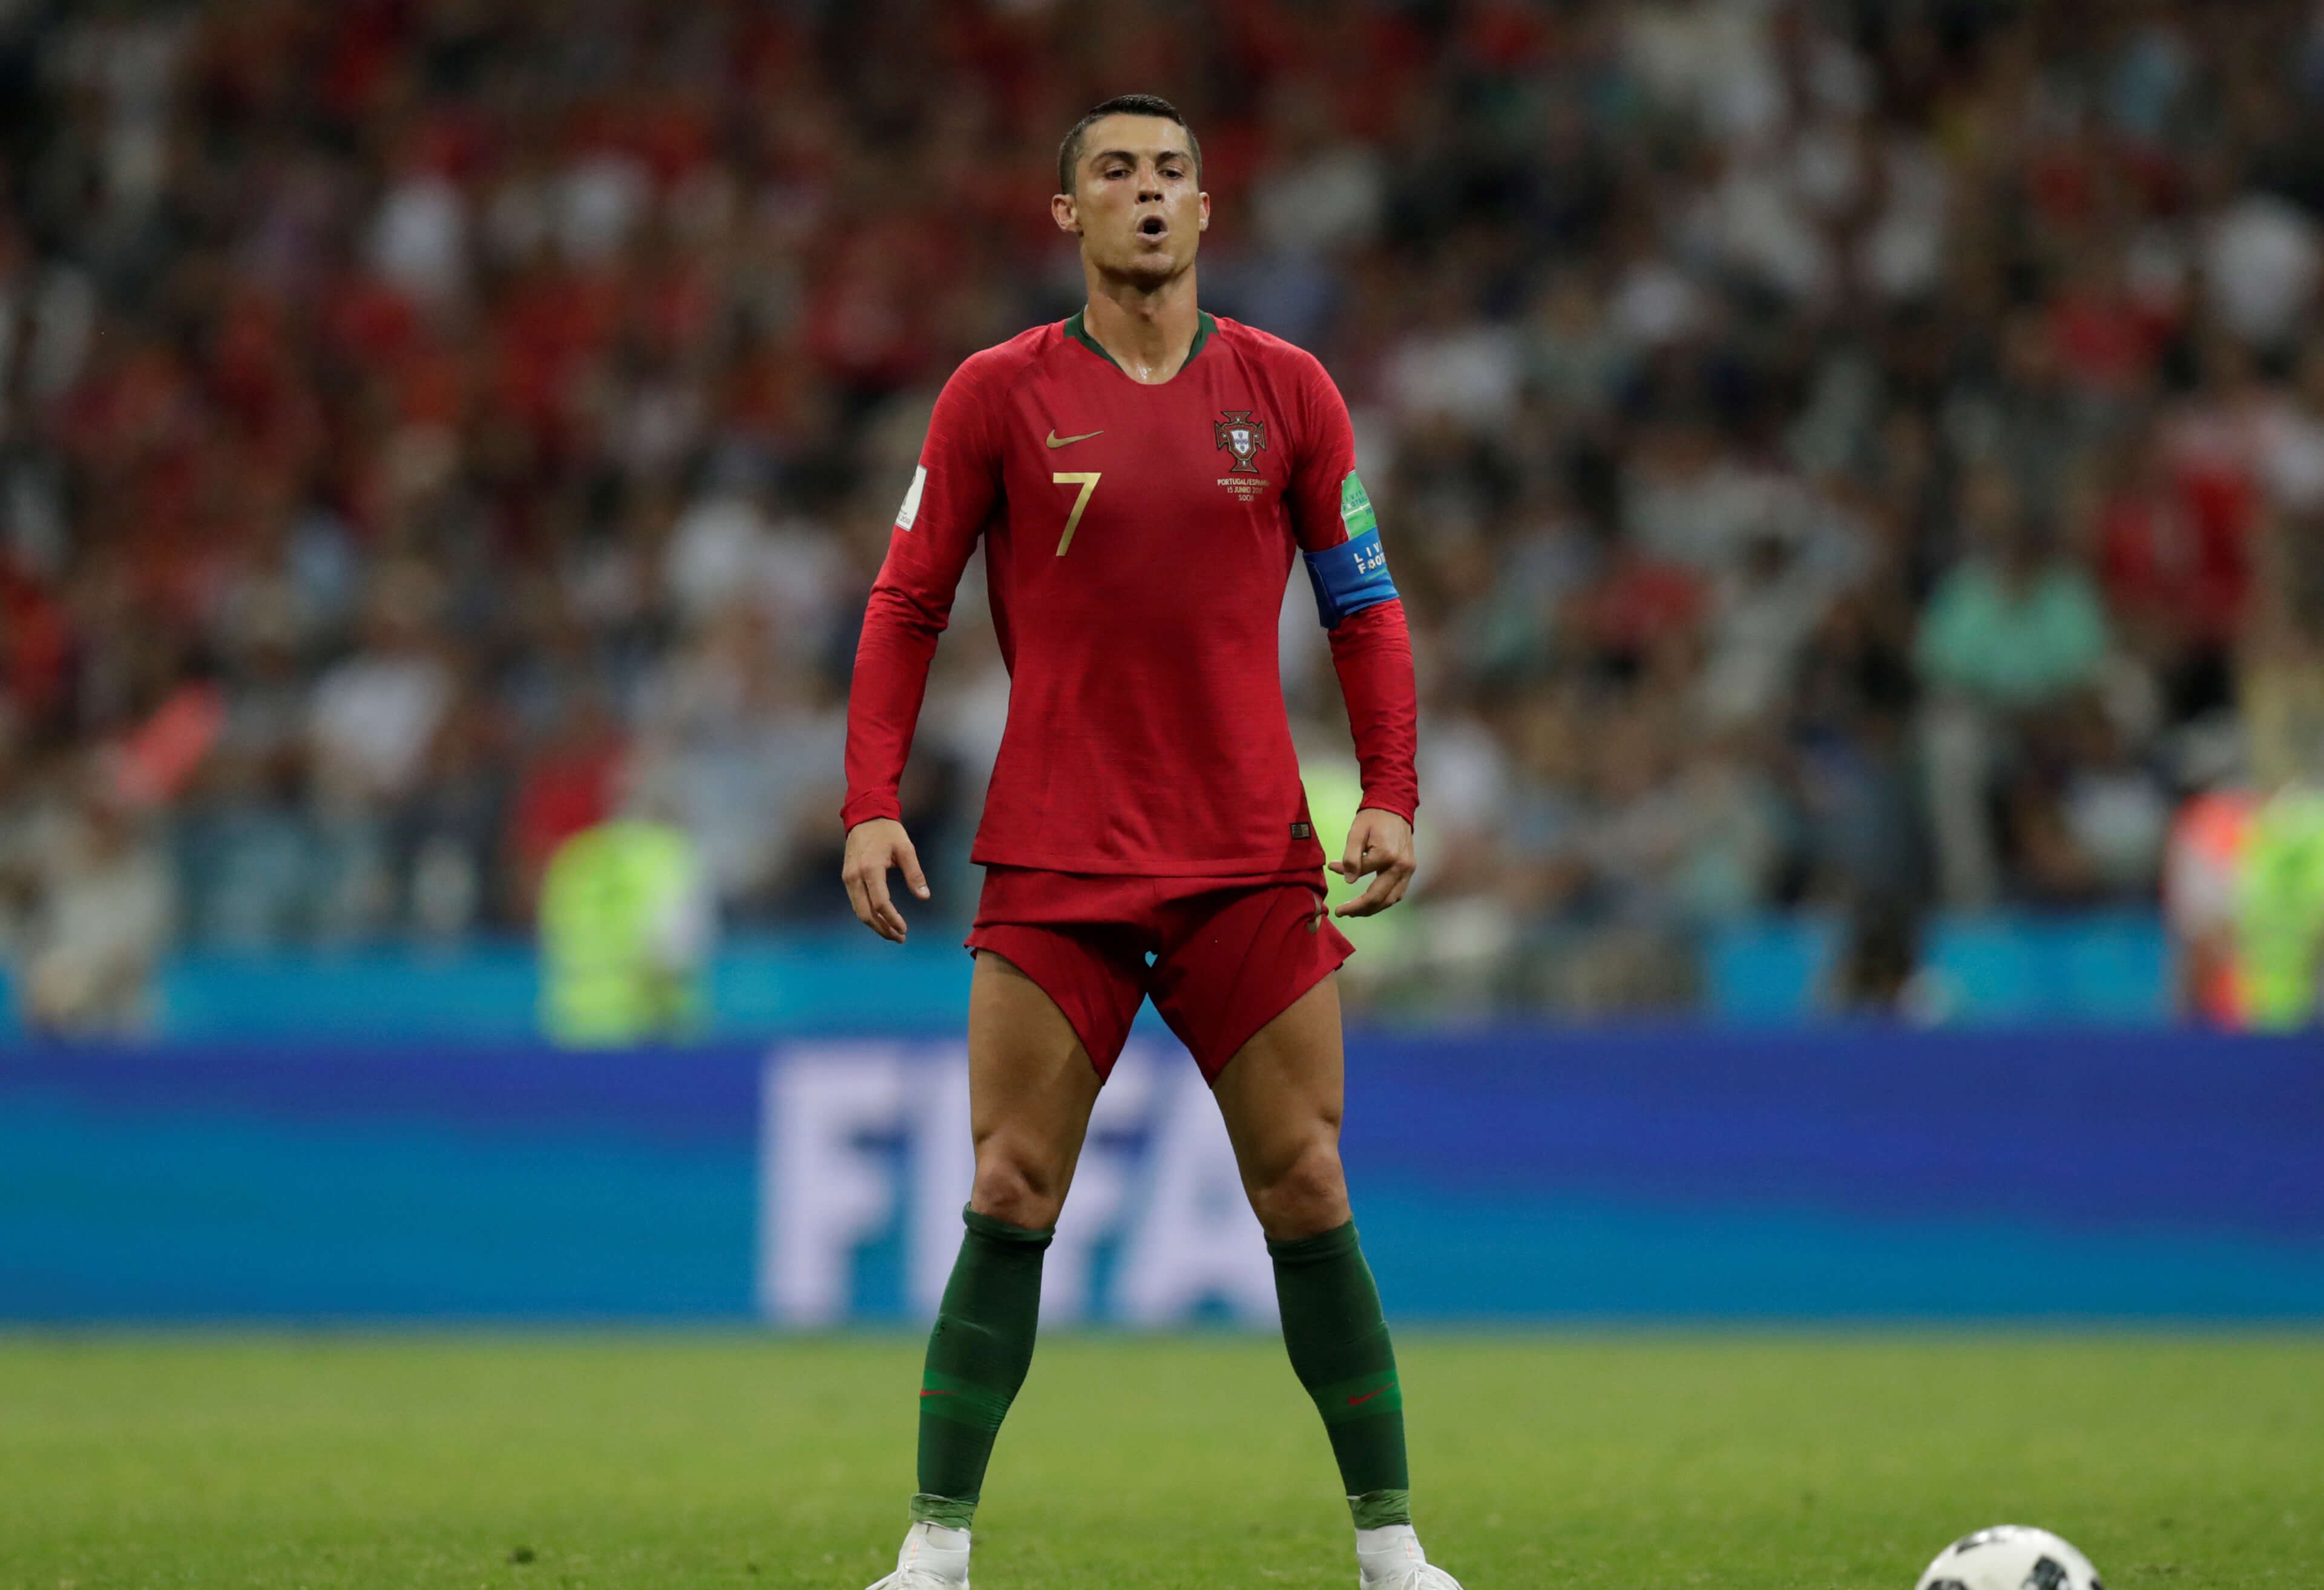 Cristiano Ronaldo Fifa World Cup 2018 Hd Photos - Ronaldo Free Kick Spain -  3840x2628 Wallpaper 